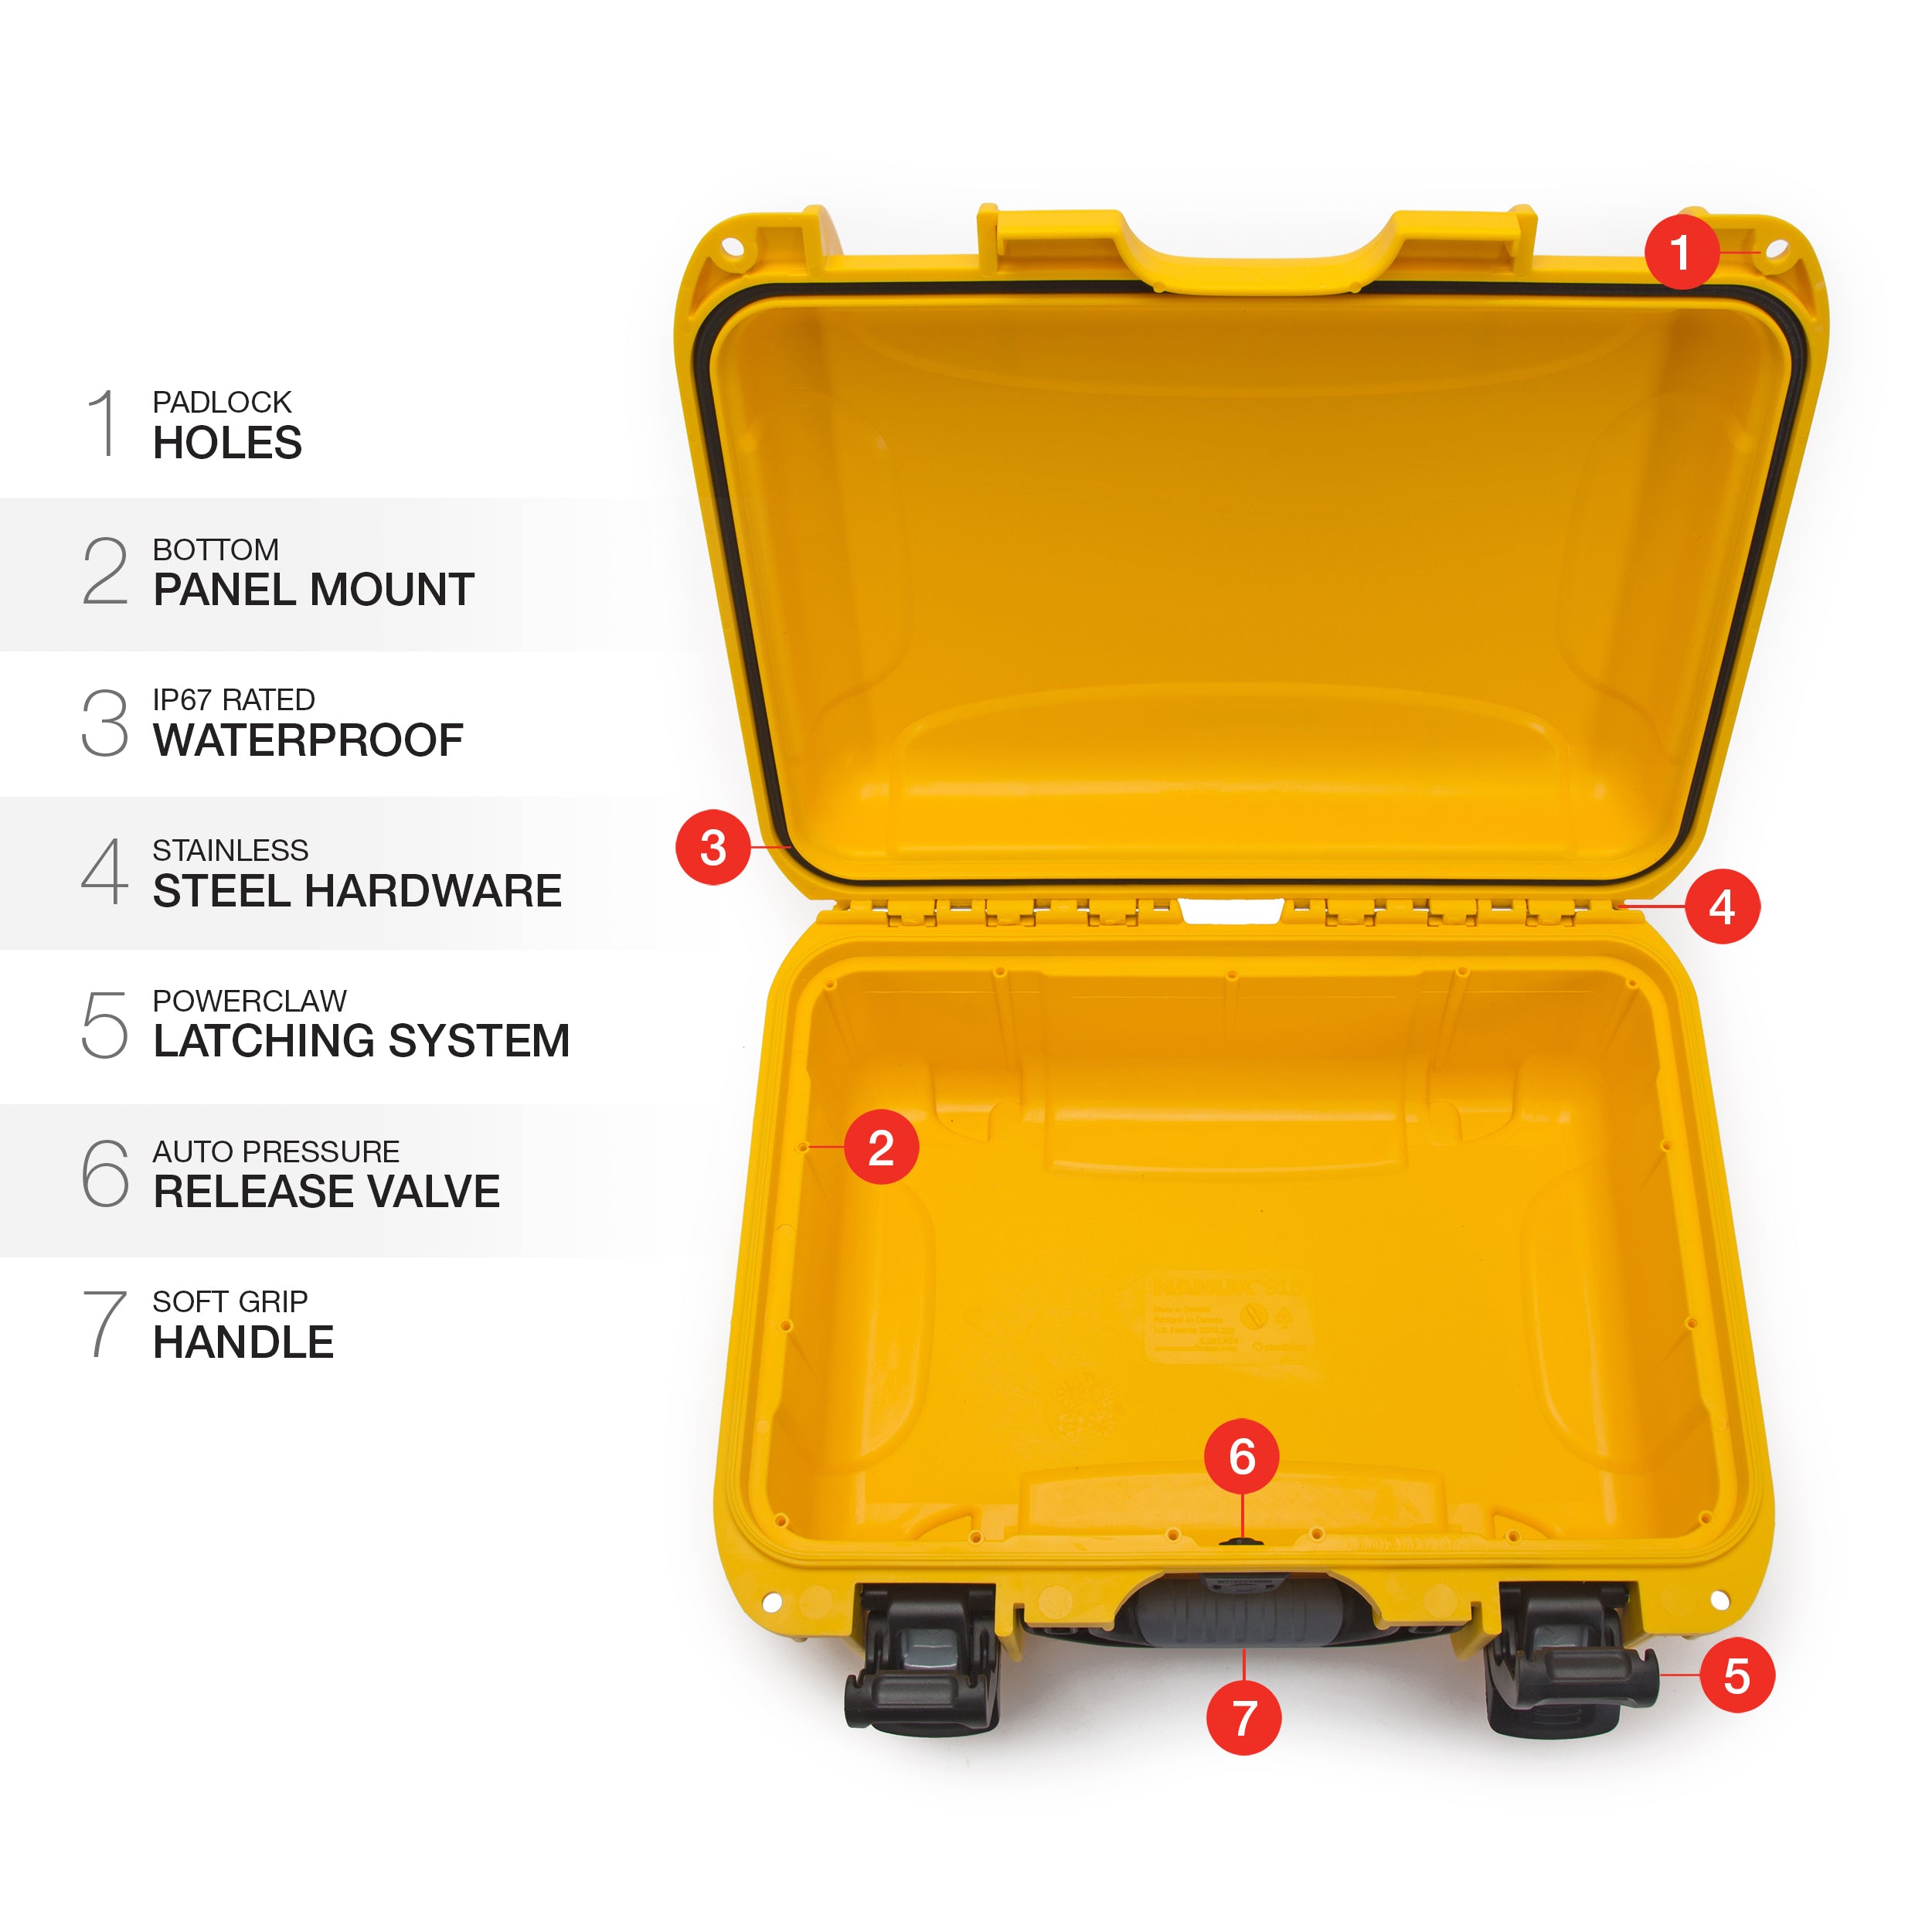 Nanuk 915-0004 Waterproof Hard Case Empty - Yellow